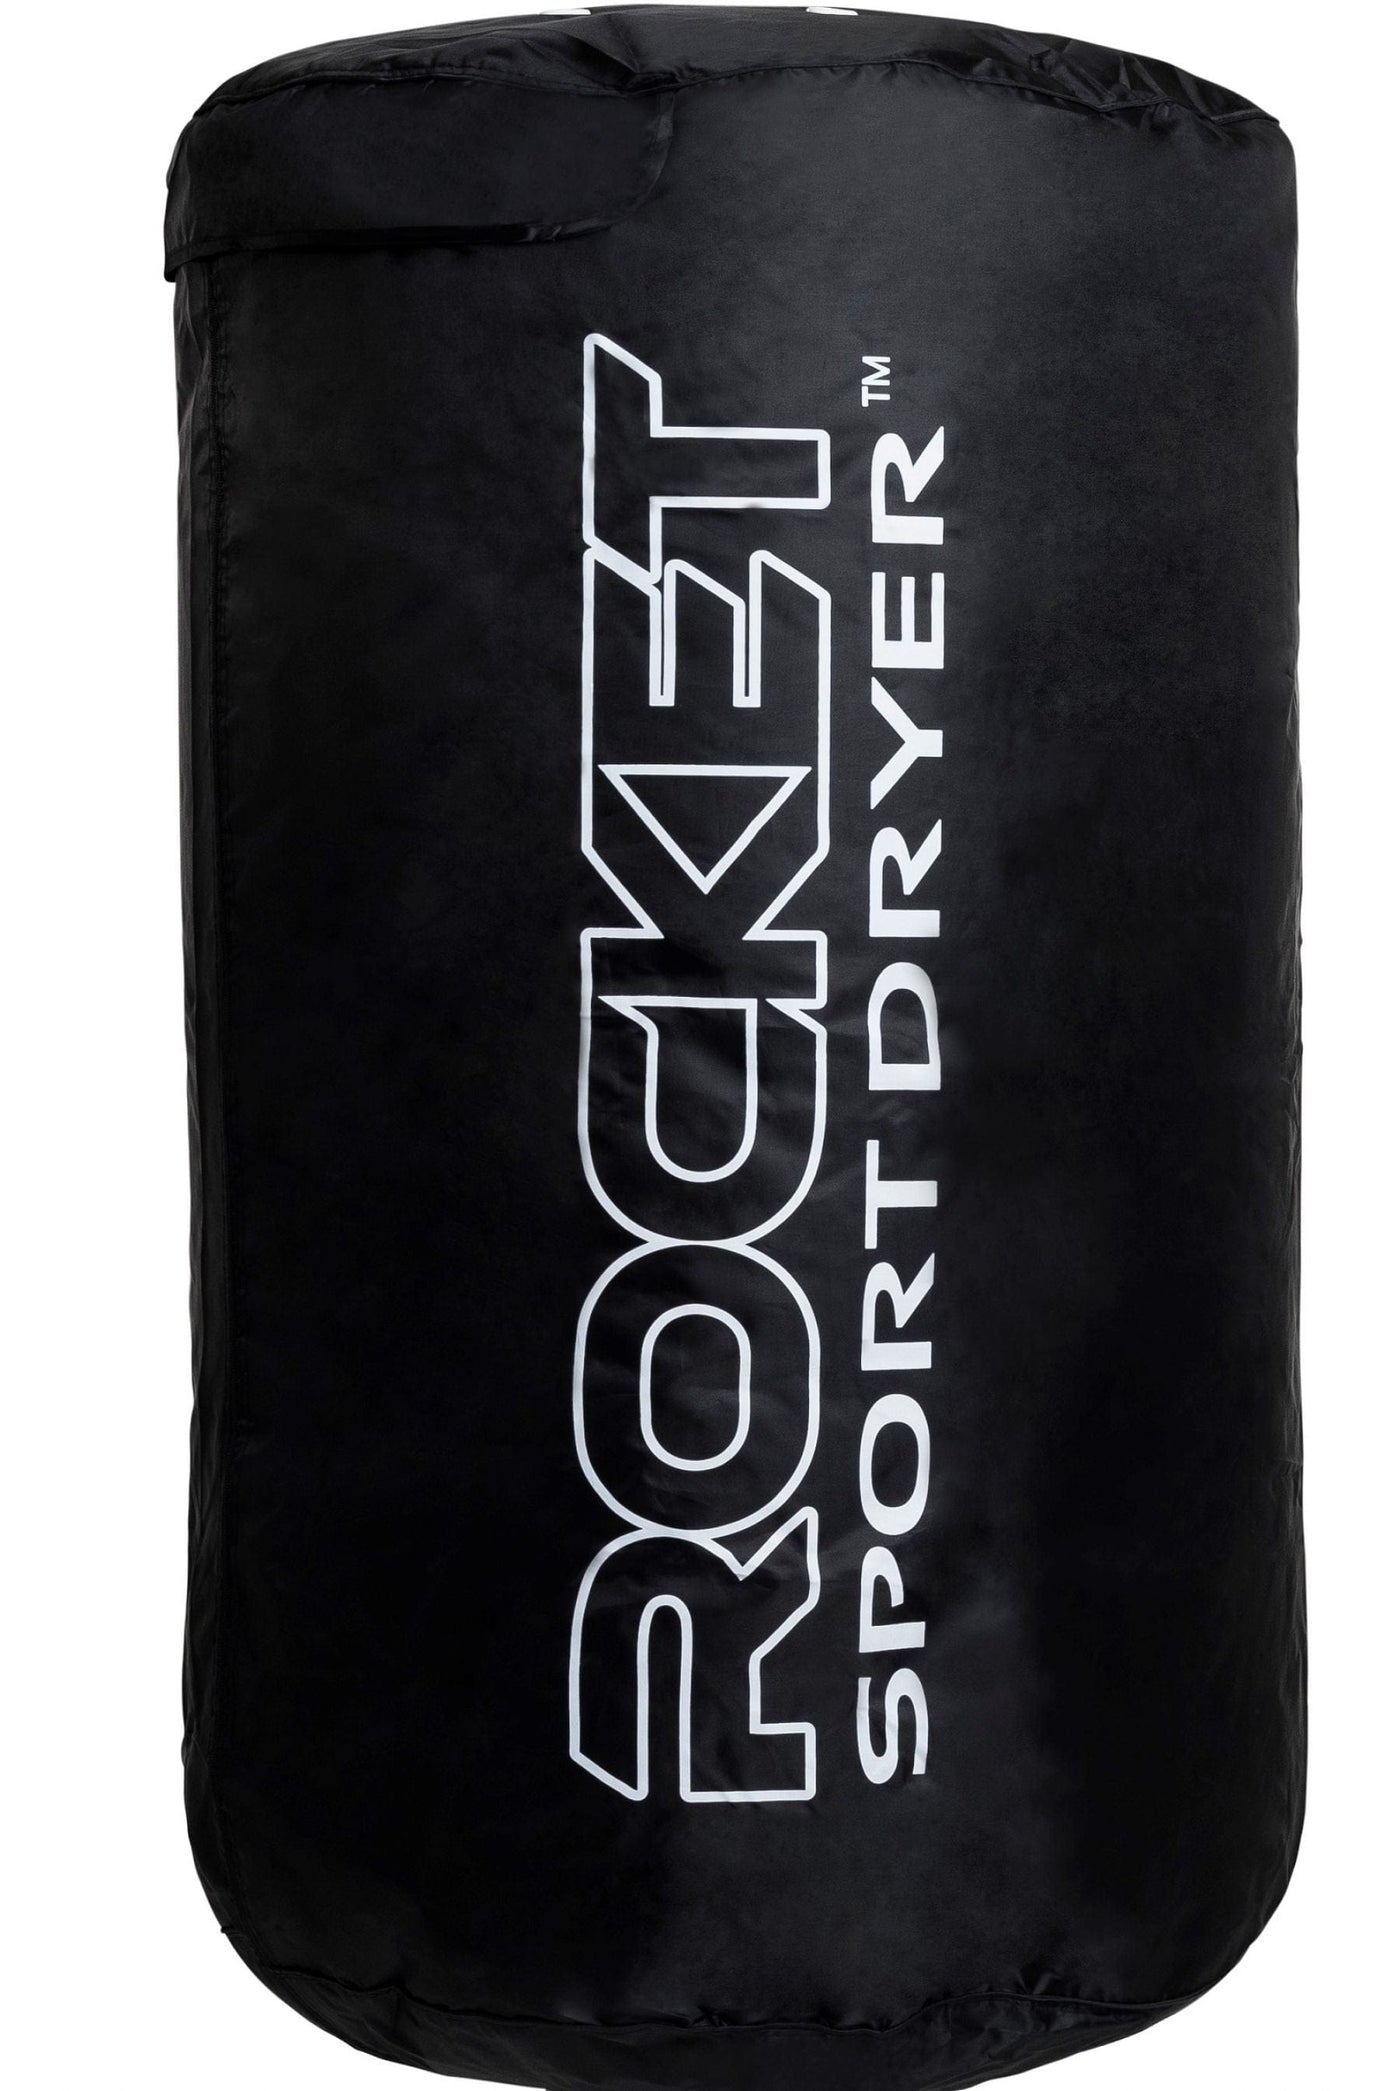 Rocket Sport Dryer Bag - The Hockey Shop Source For Sports